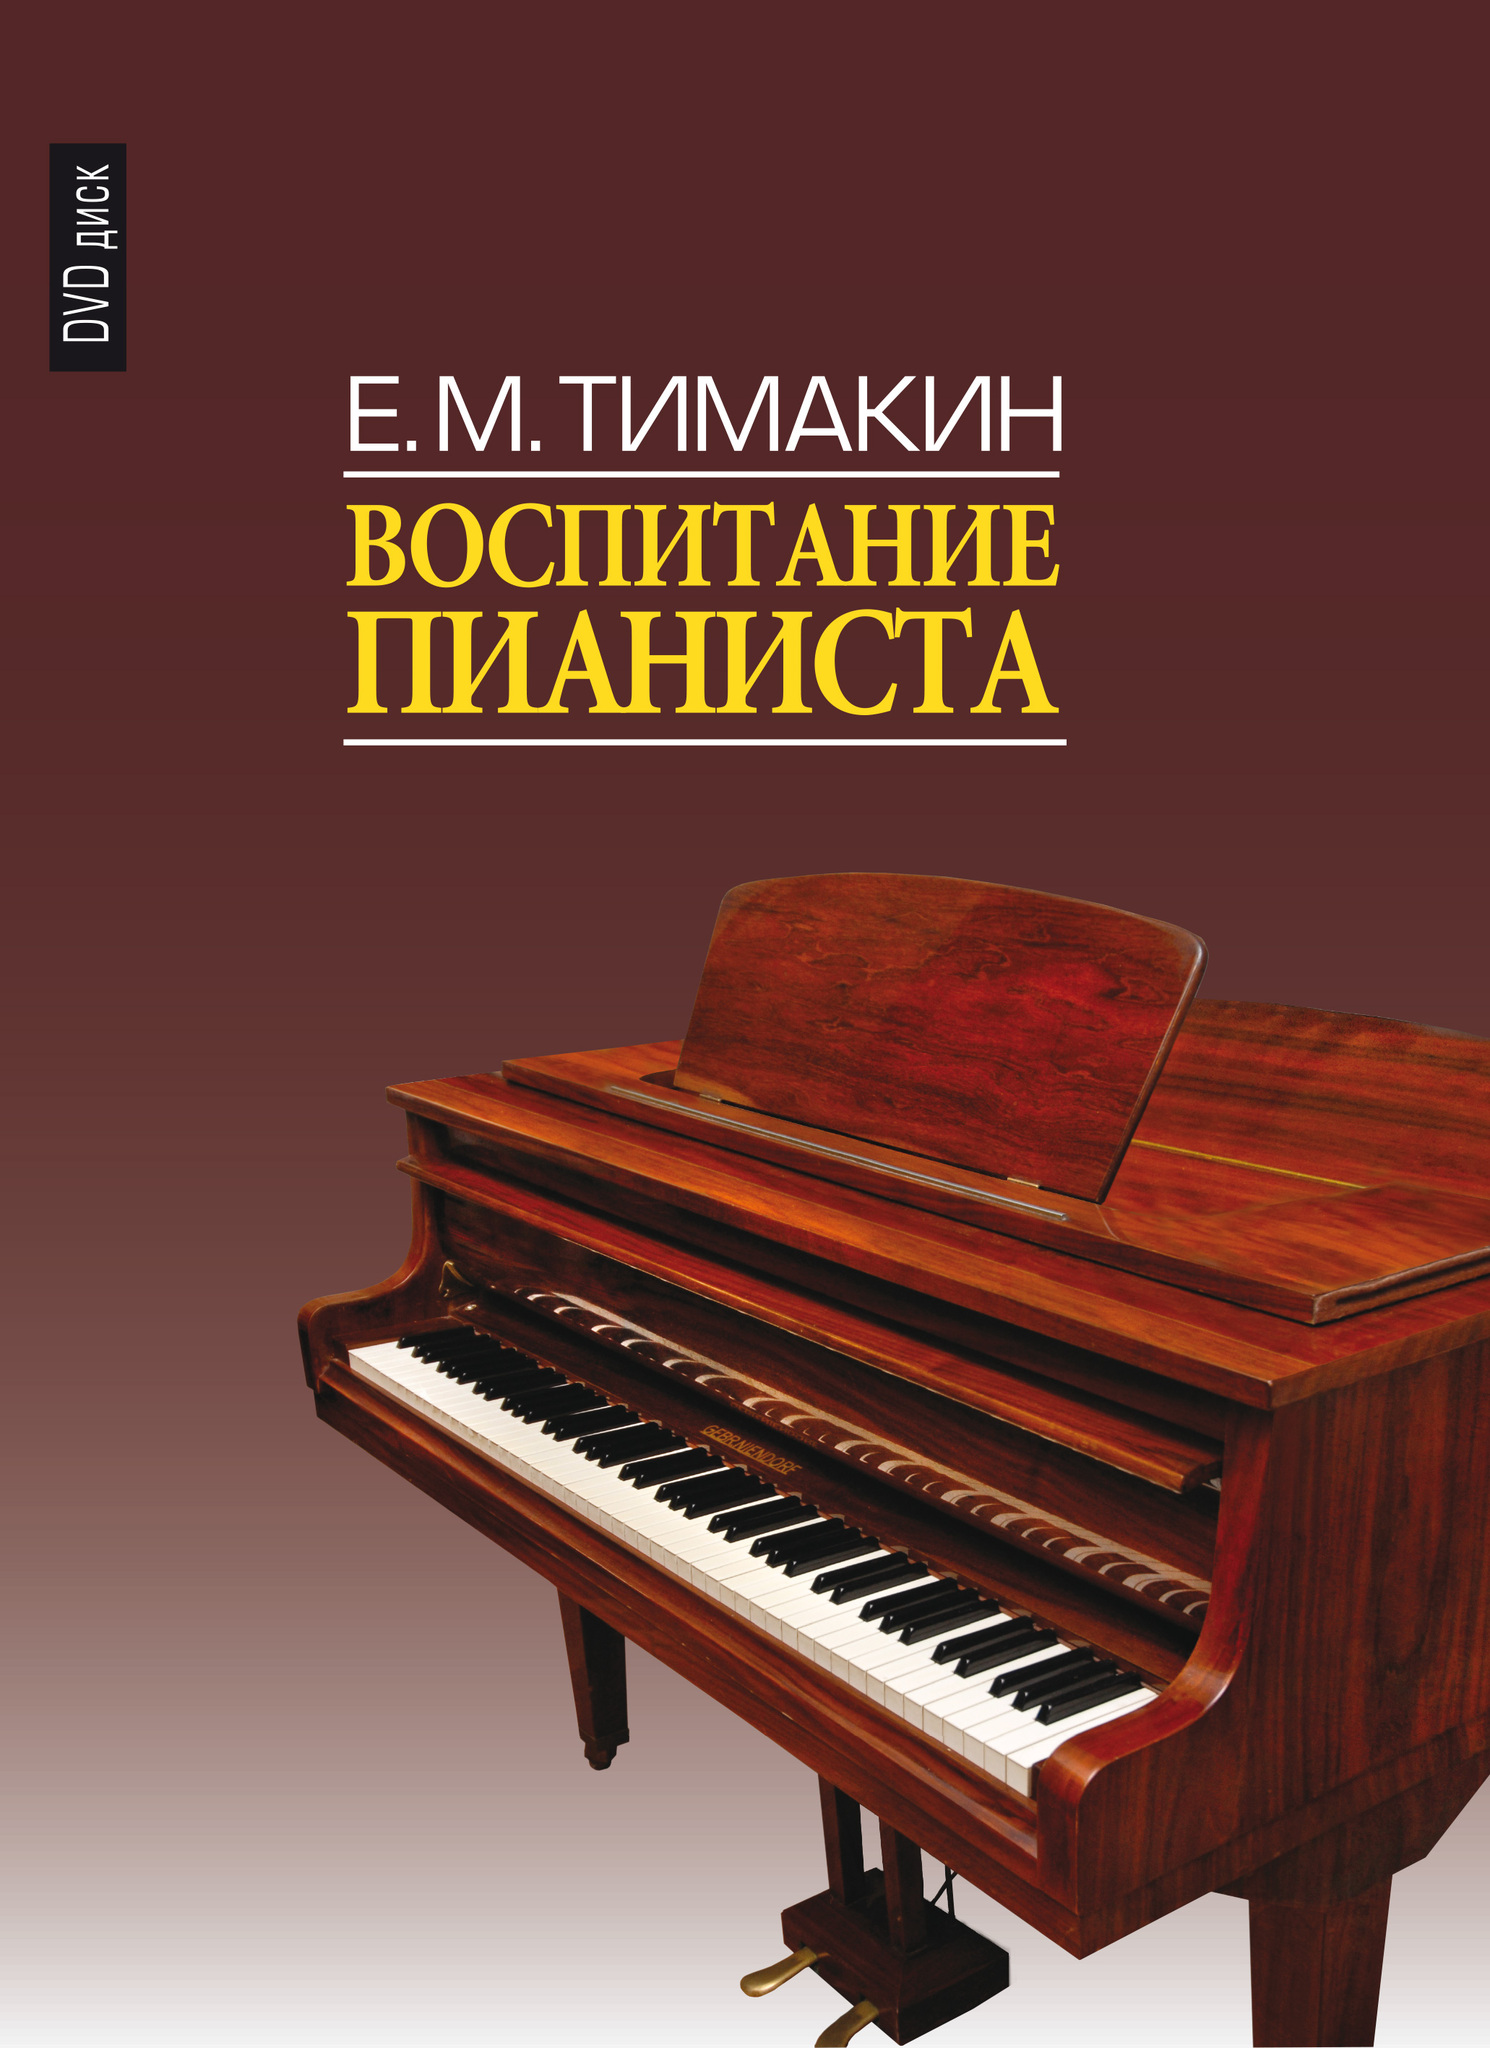 Воспитать музыканта. Тимакин воспитание пианиста. Фортепиано. 16858ми Тимакин е.м. воспитание пианиста (+ DVD), Издательство «музыка».